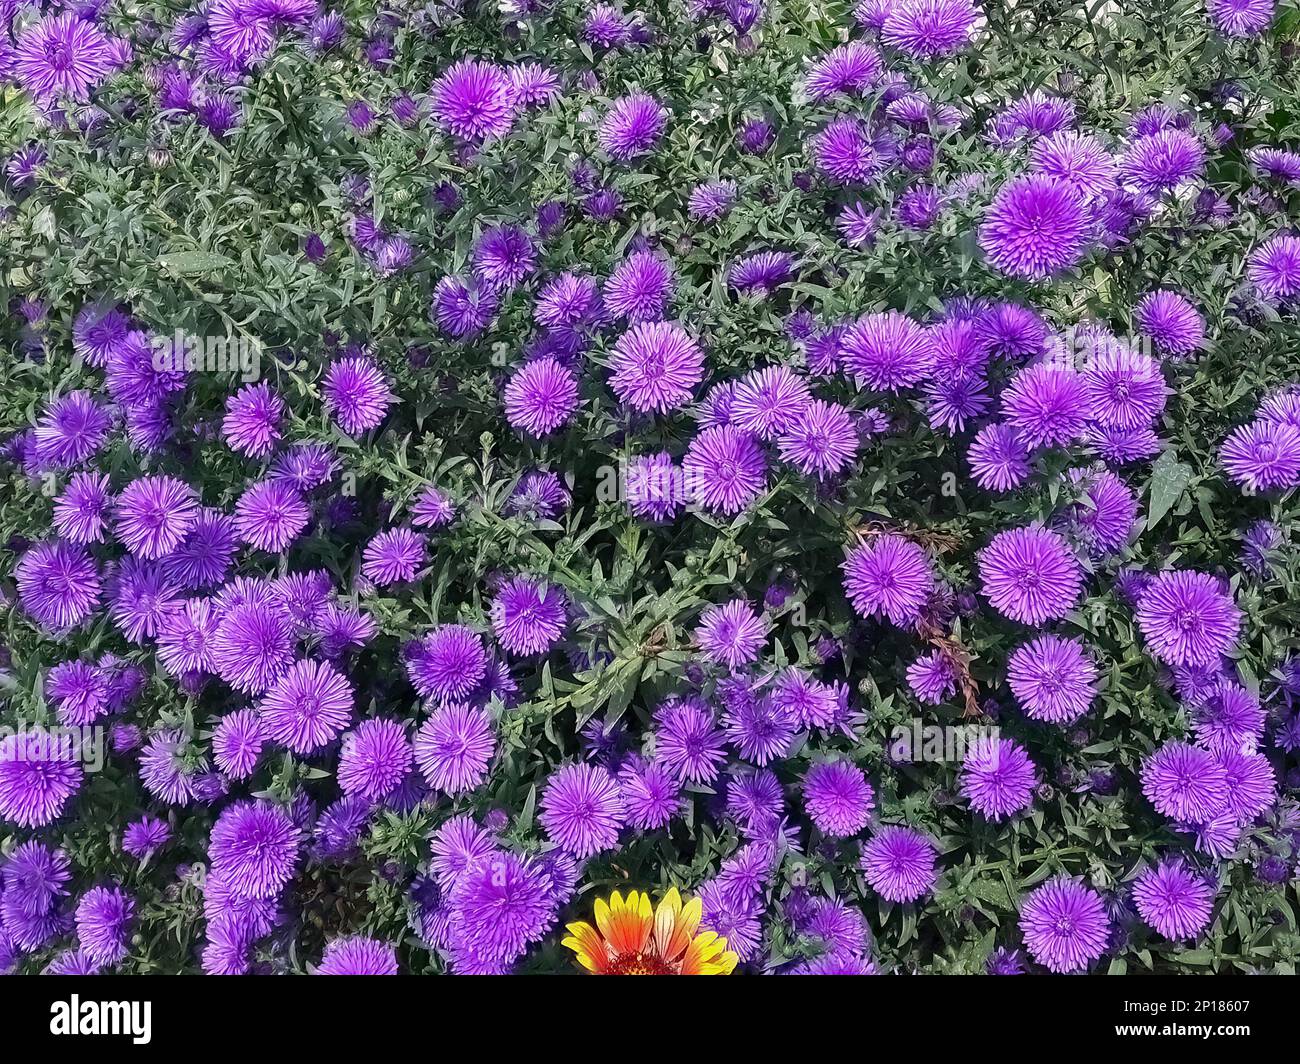 Symphyotrichum novae angliae Grape Crush purple flower in the garden design Stock Photo